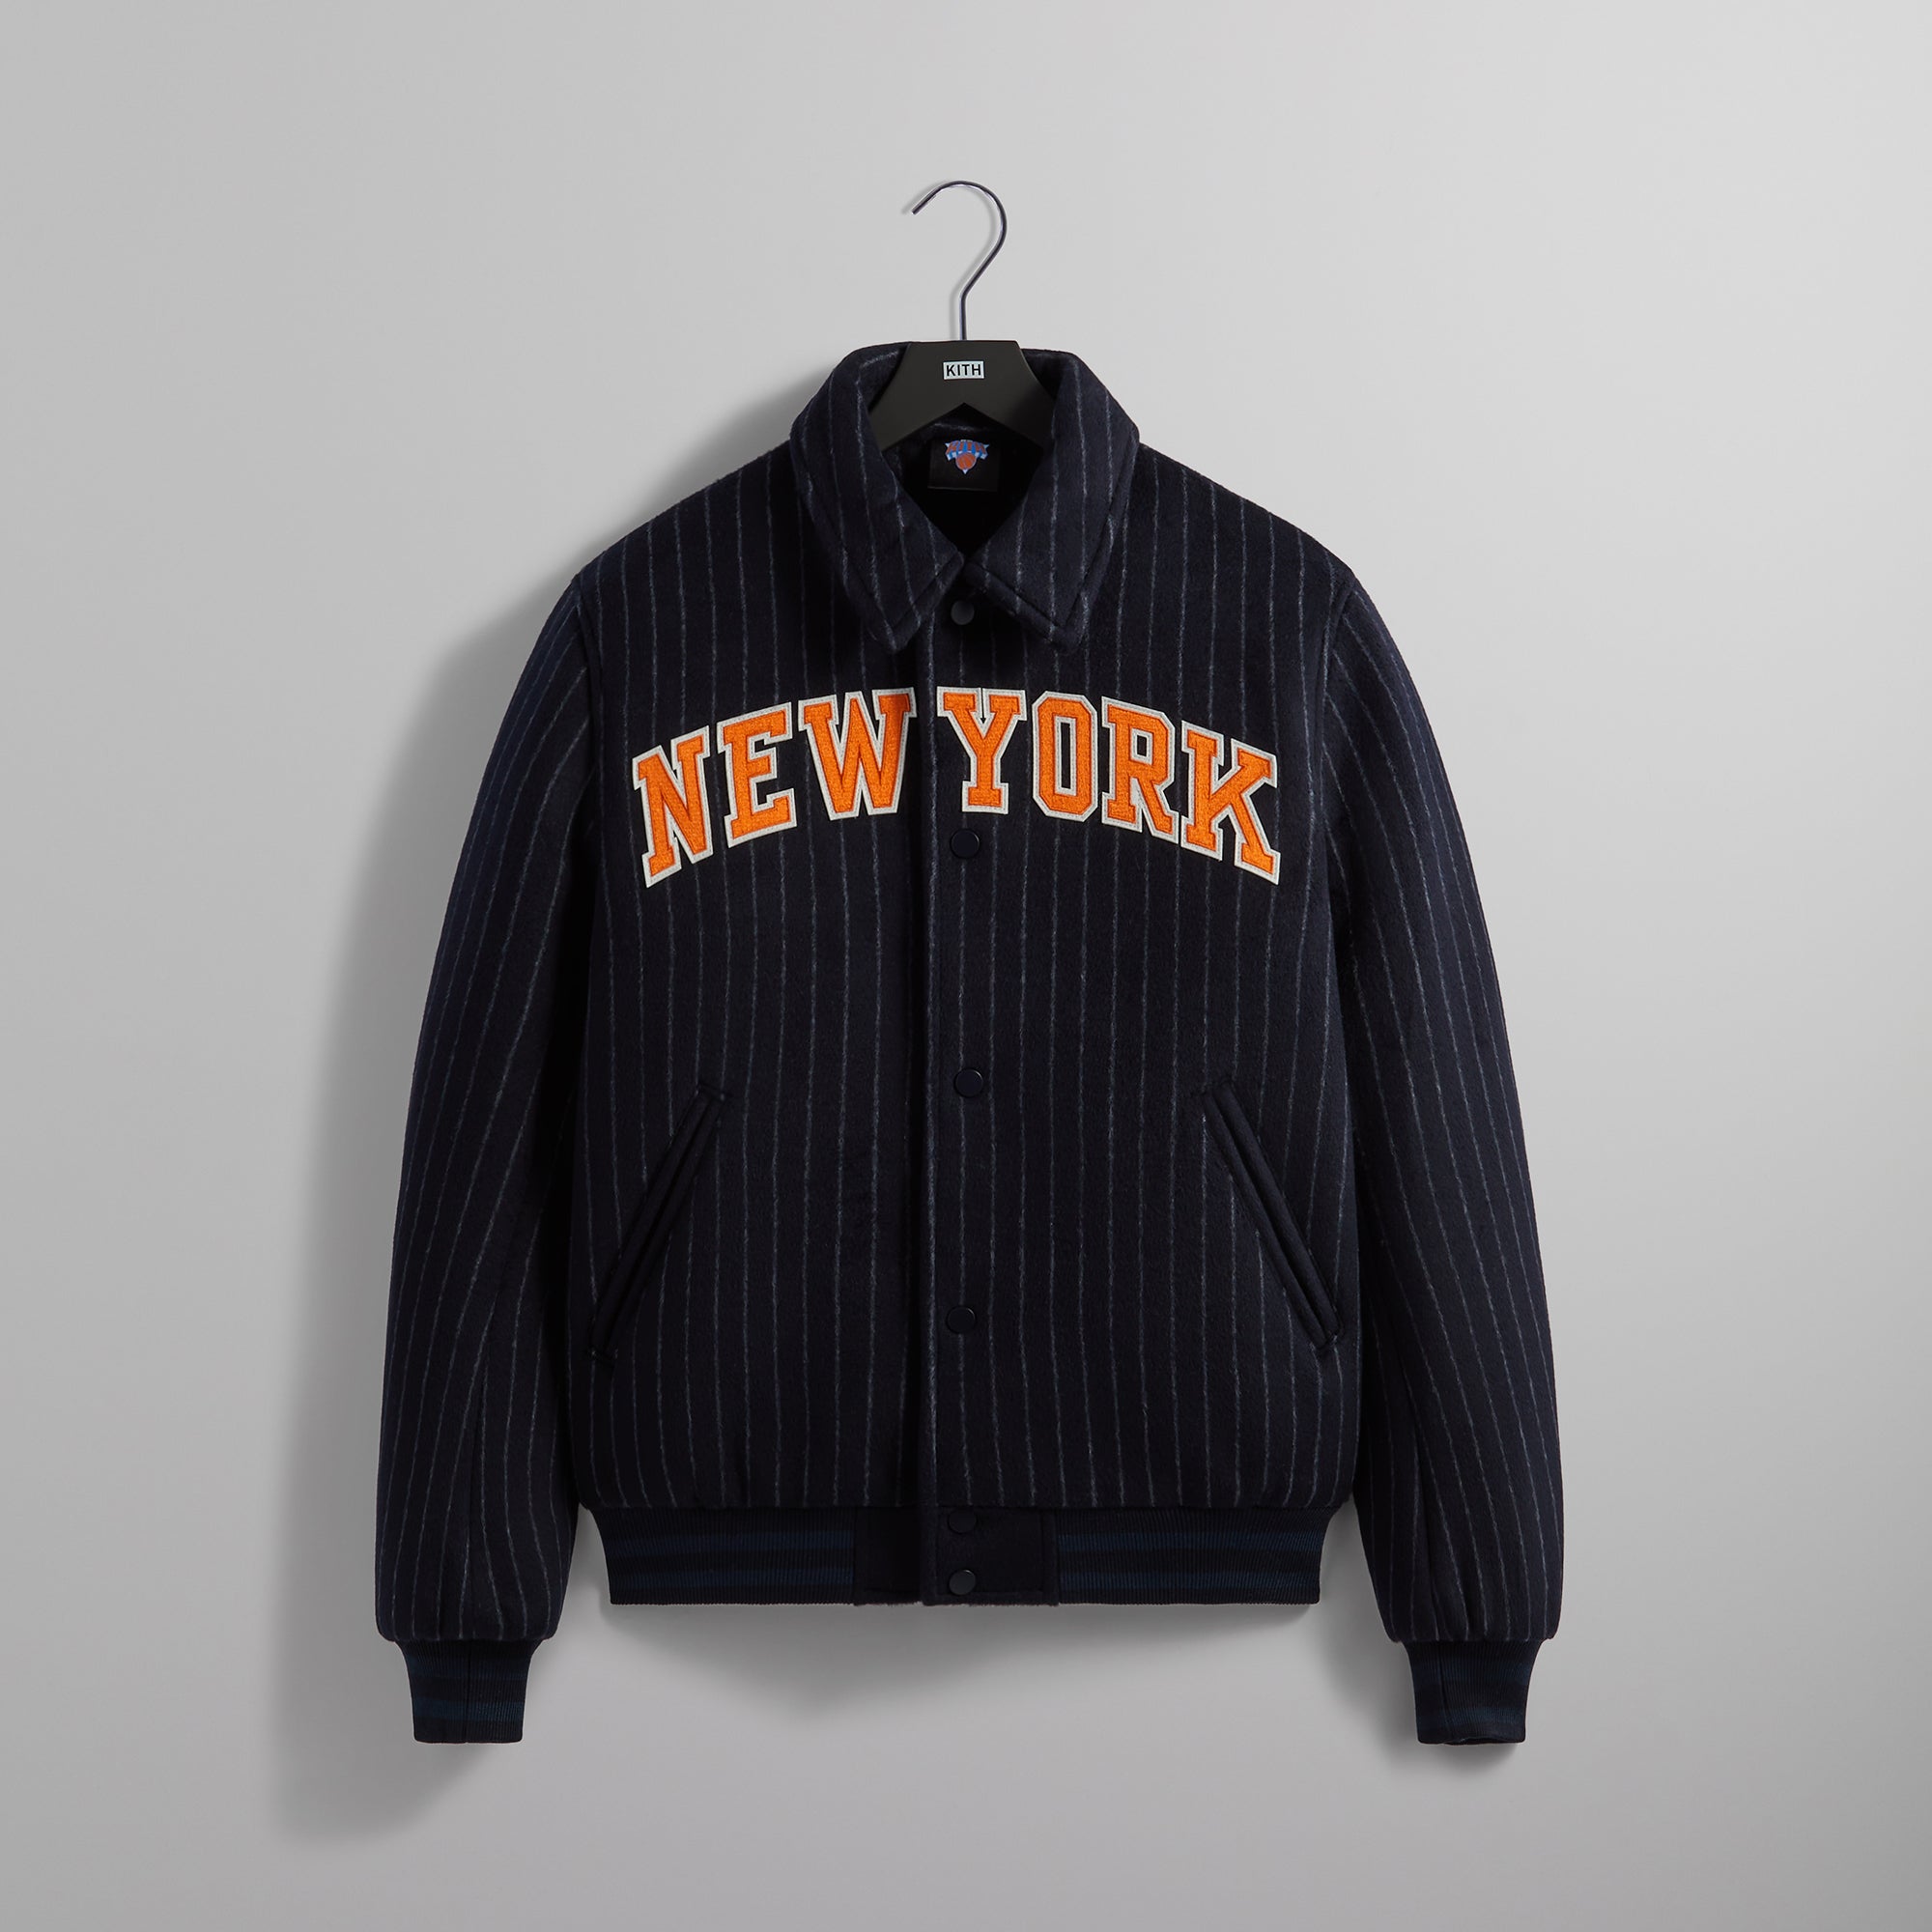 New york knicks fashion kith nba colors - ColorsWall